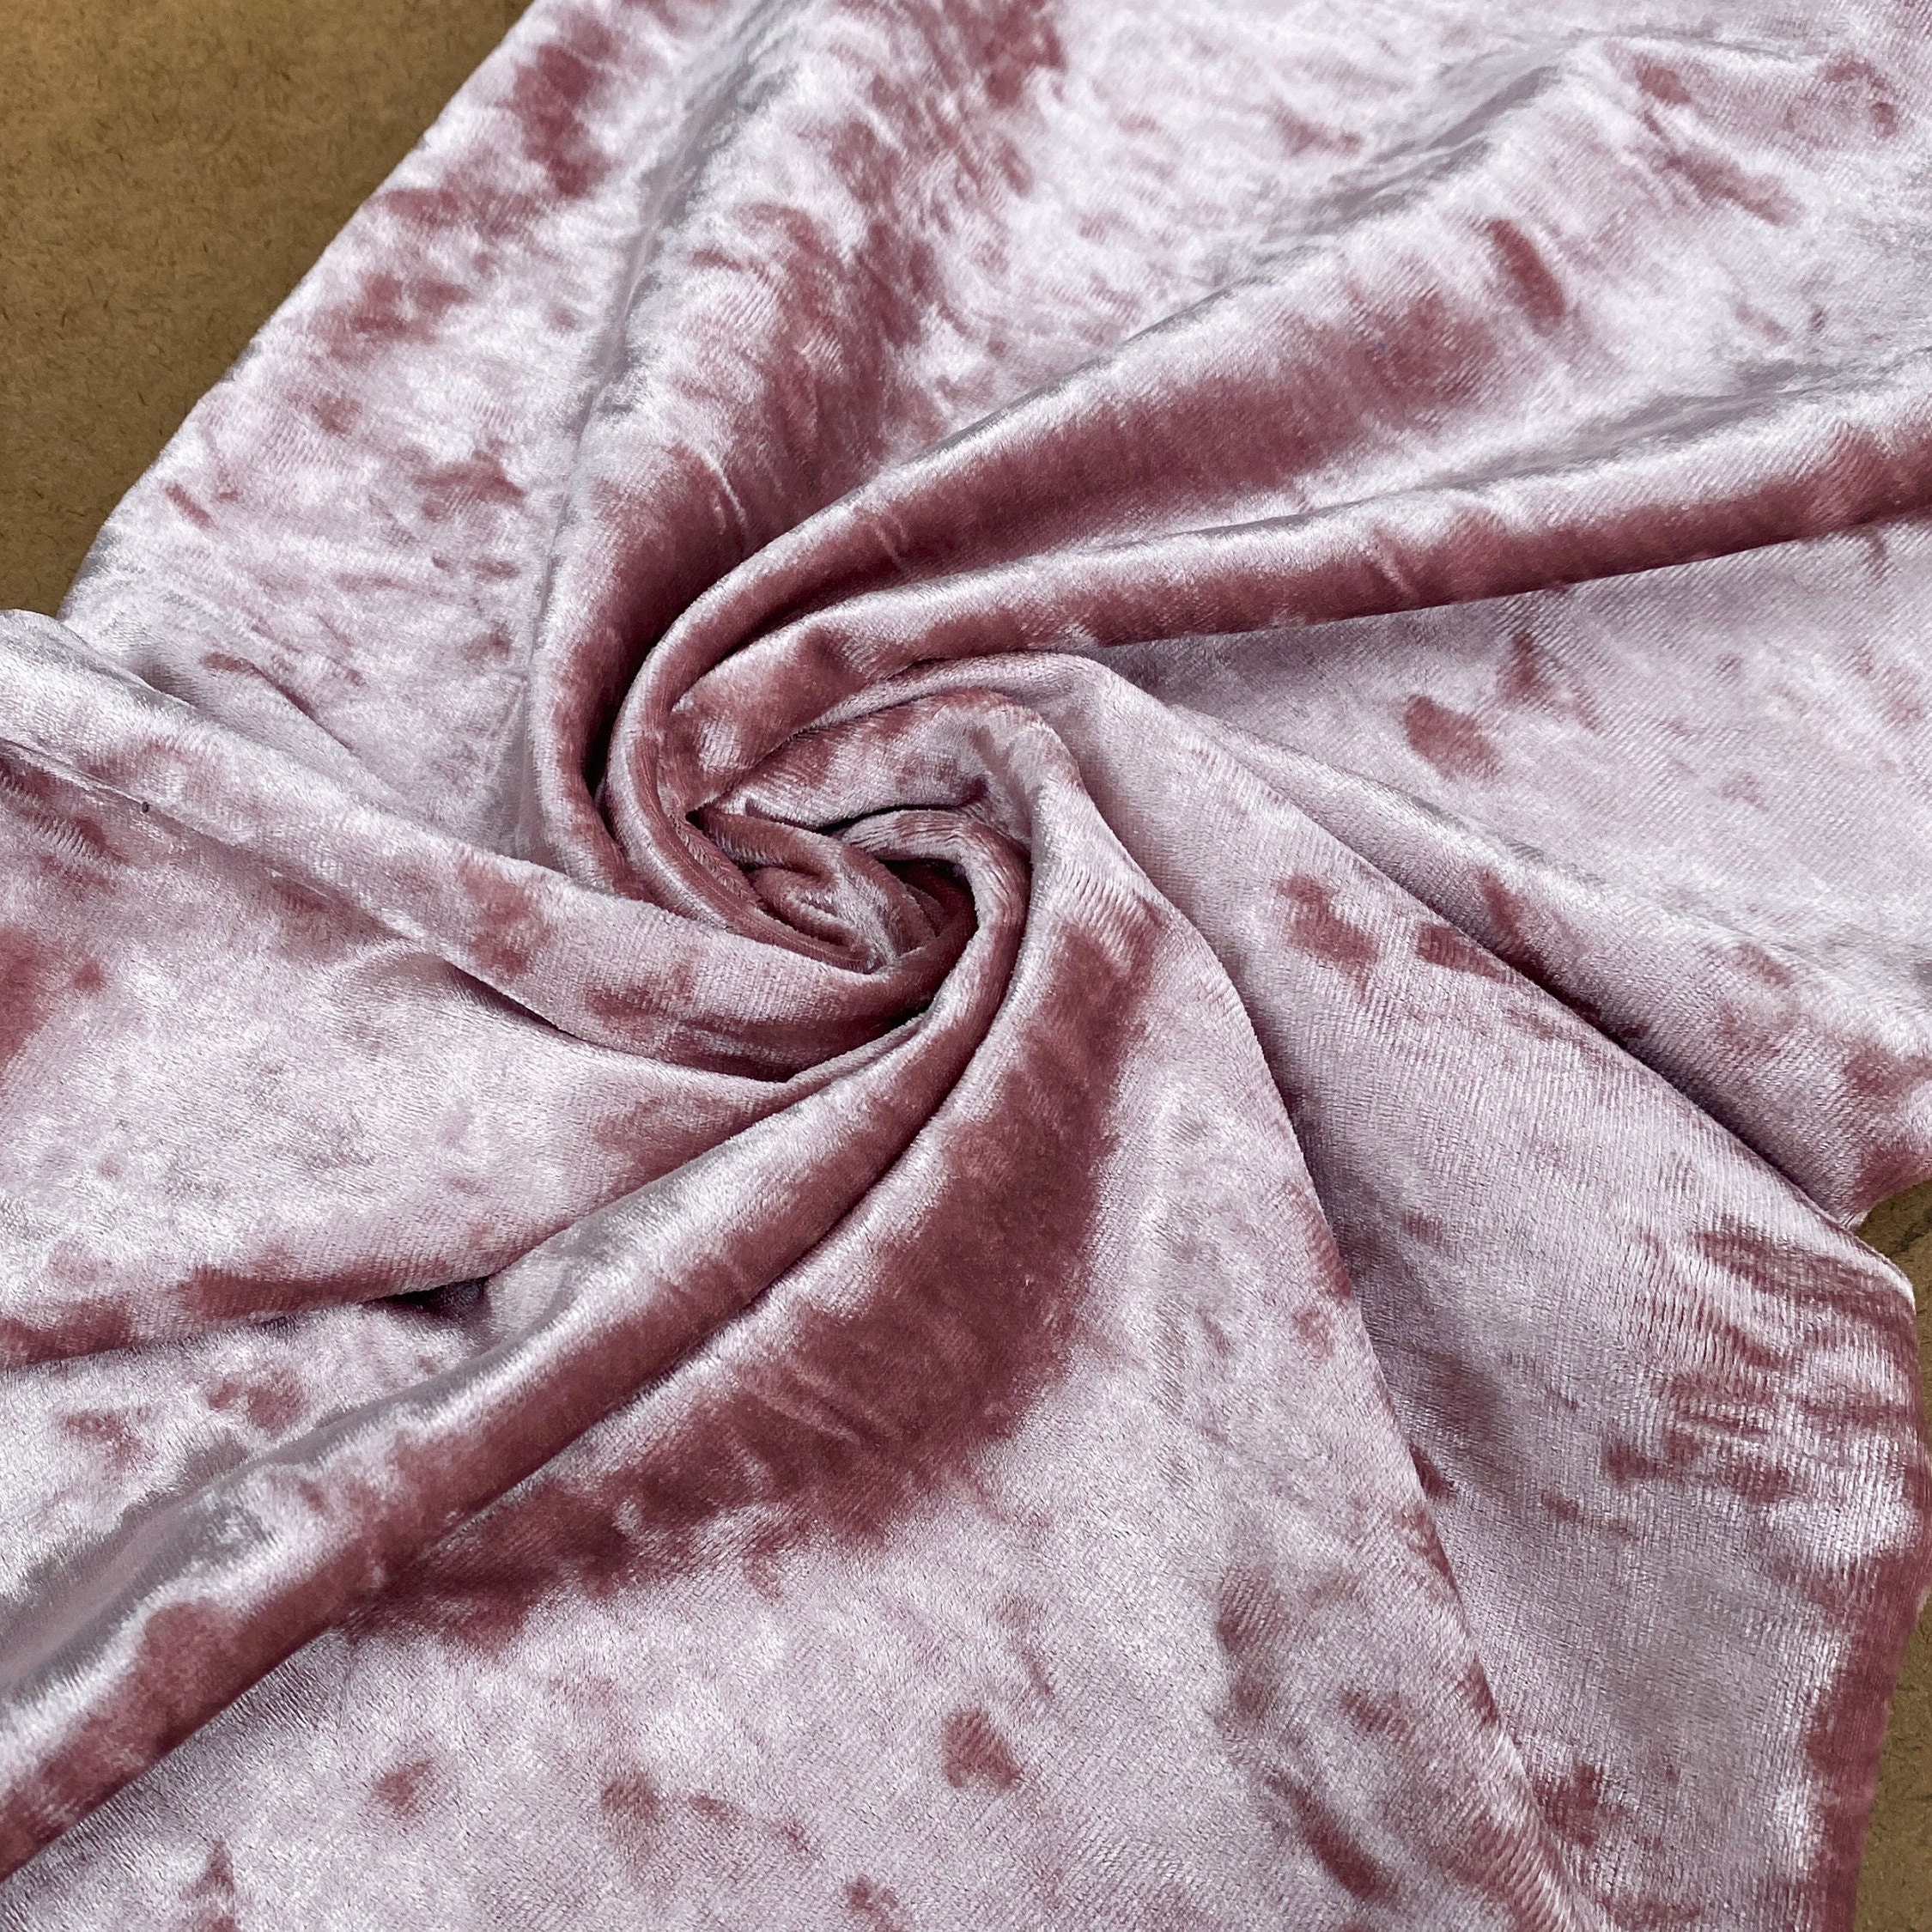 Crushed Velvet Fabric Pink, Red Velvet Stretch Fabric